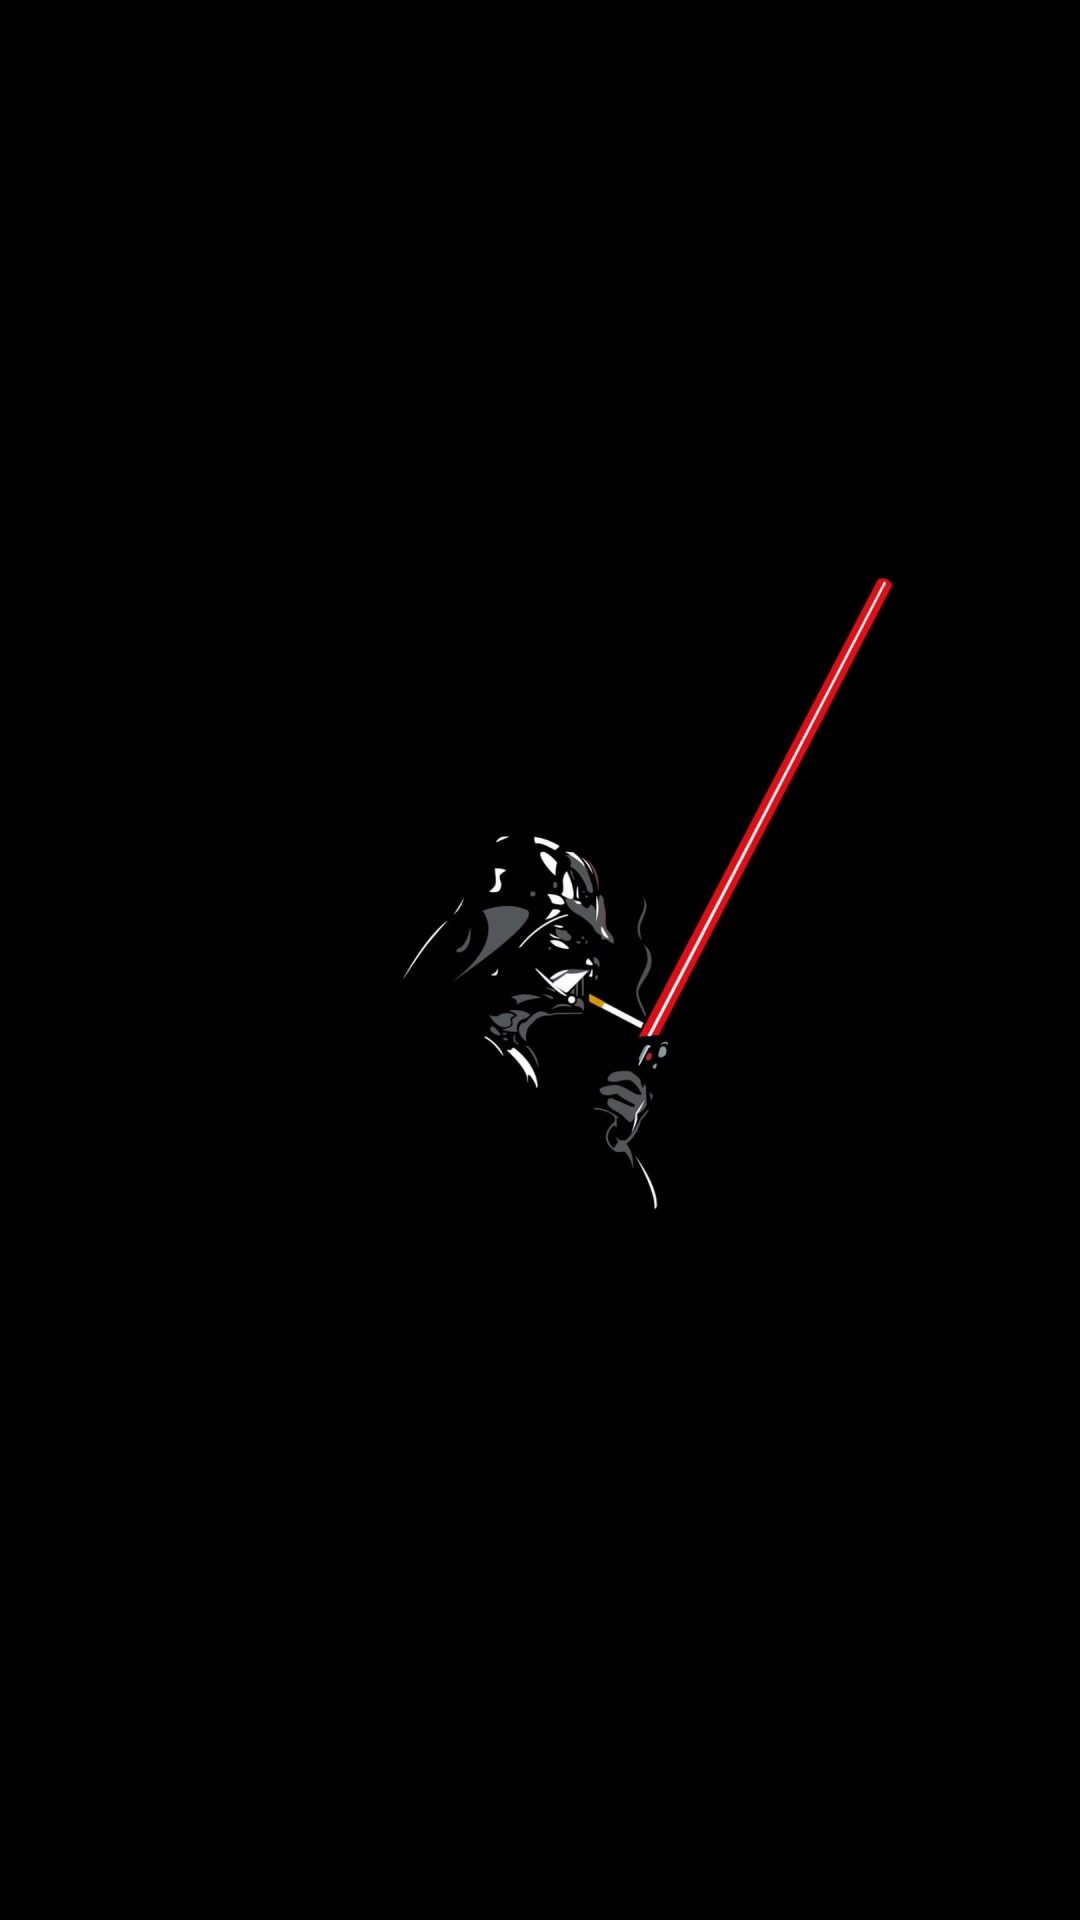 Darth Vader Lighting a Cigarette Wallpaper for Google Nexus 5